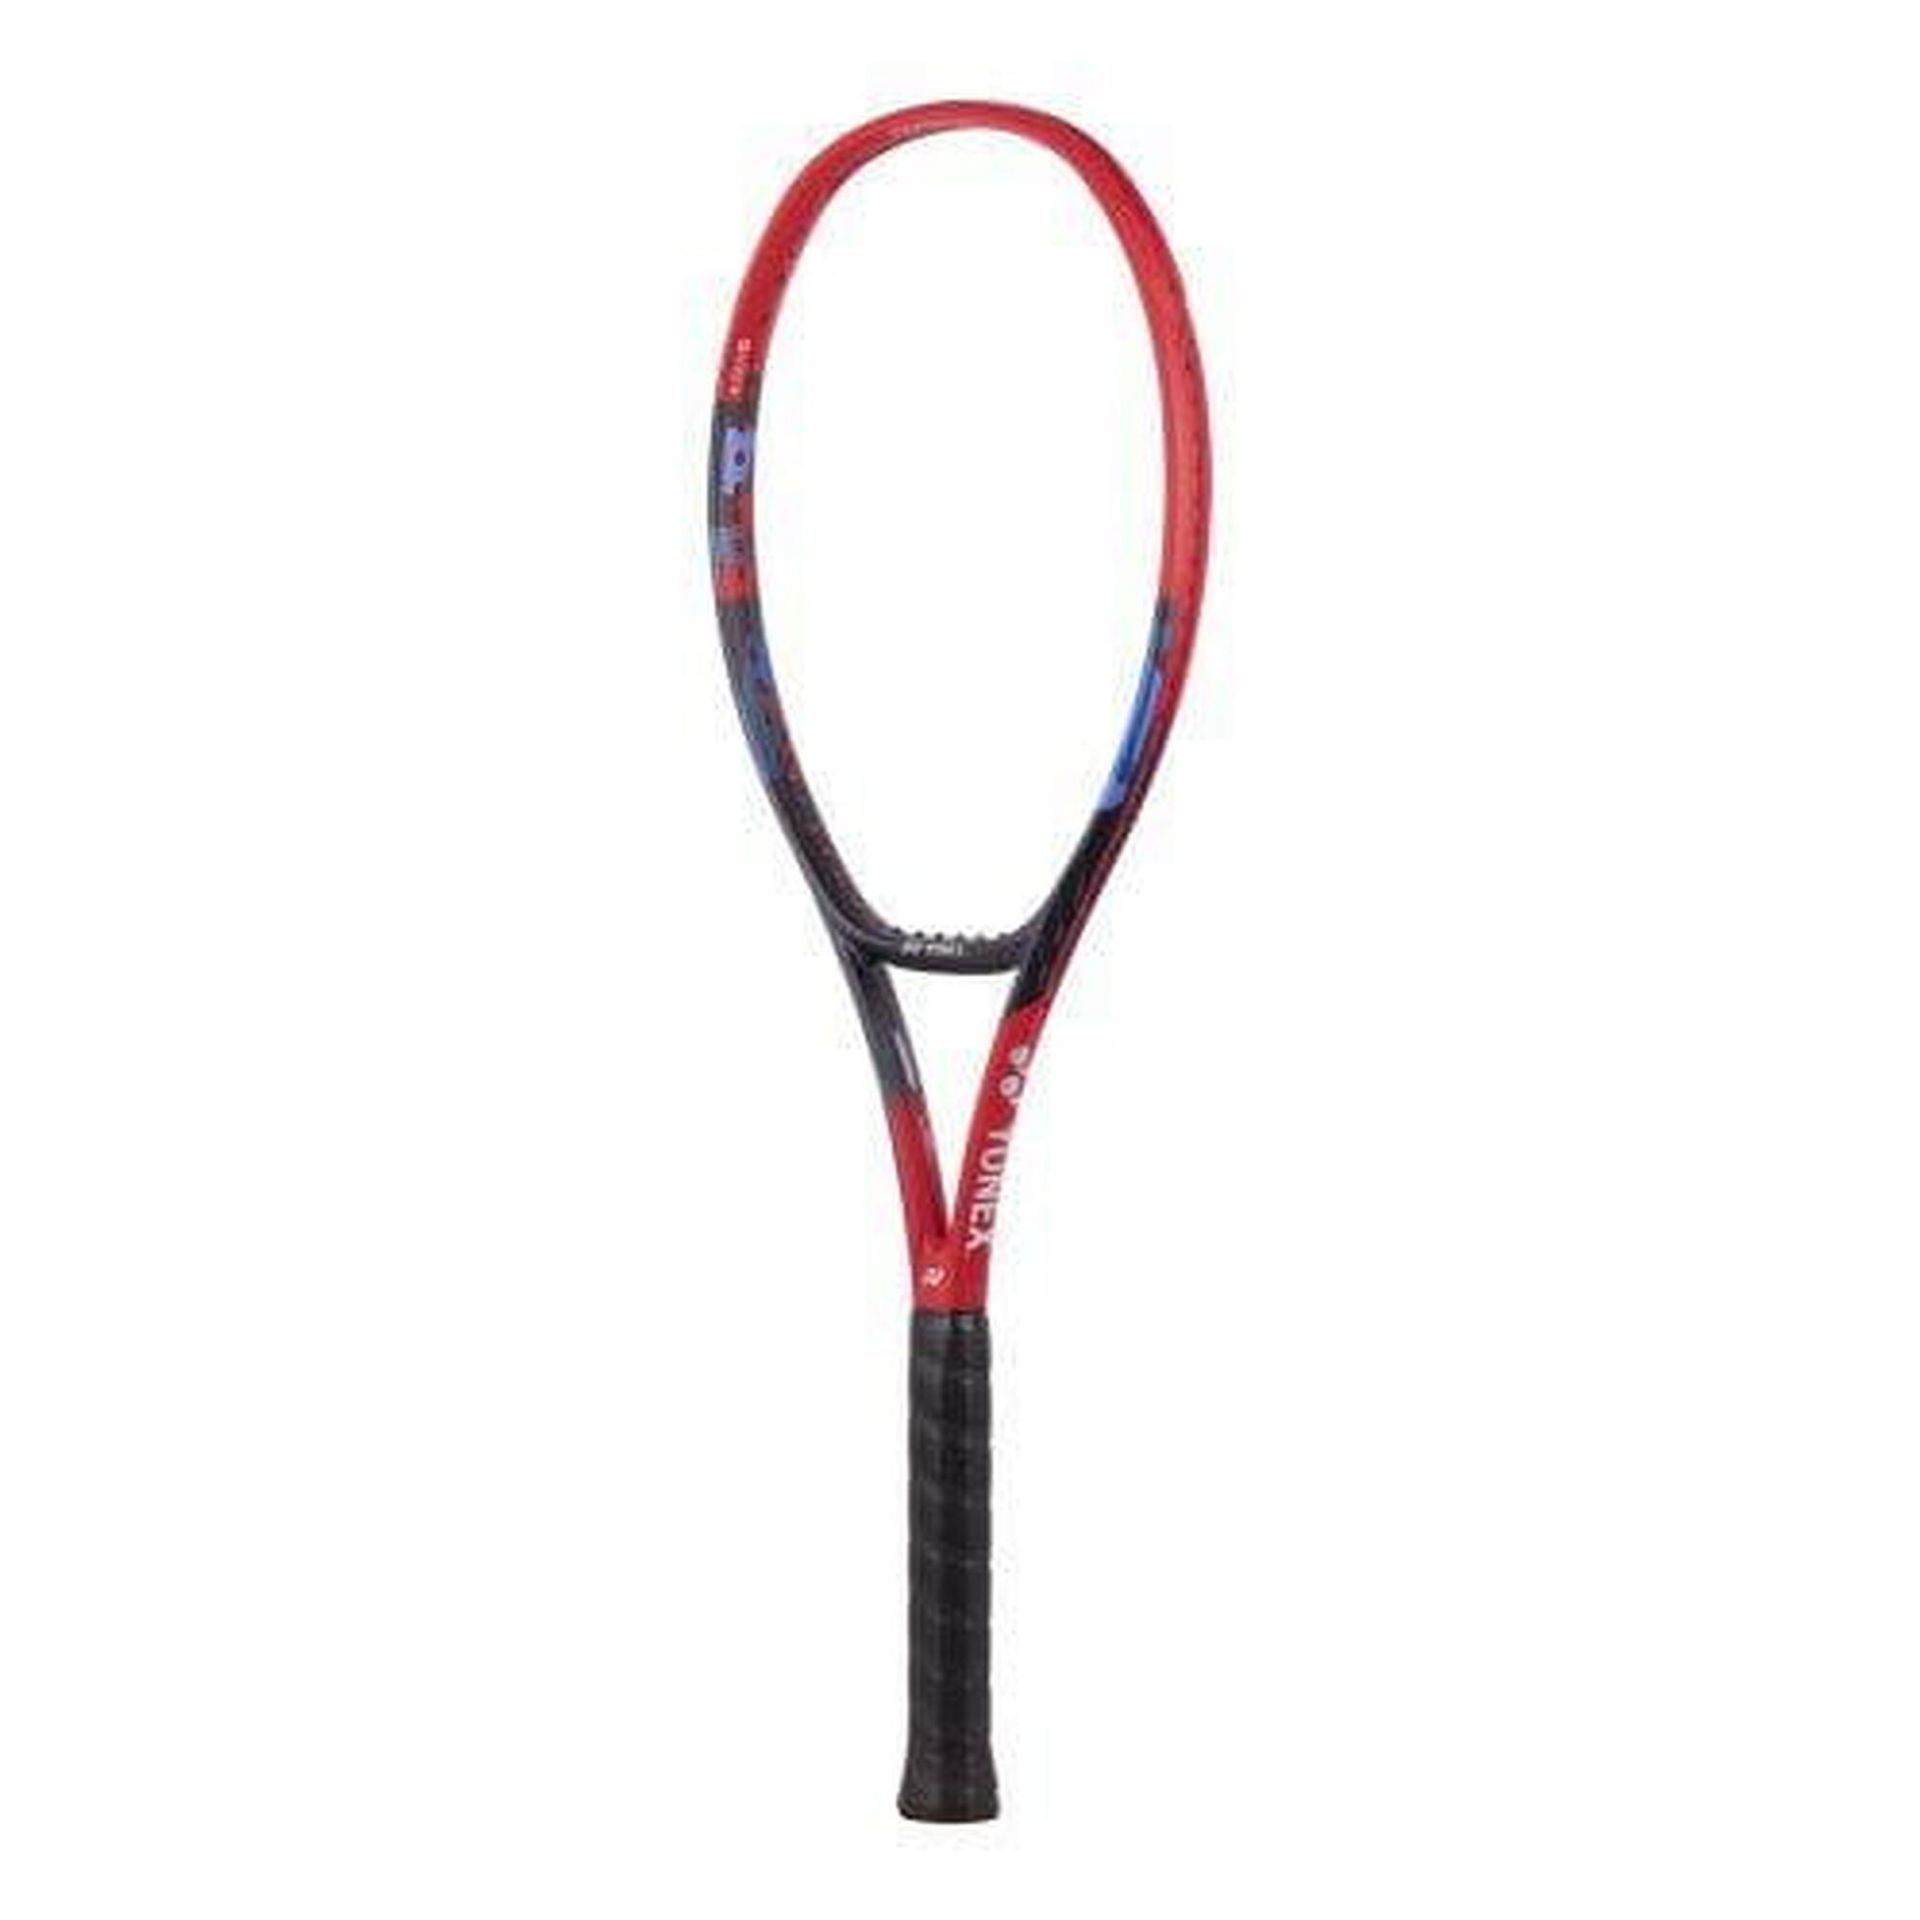 Rakieta tenisowa Yonex VCORE 98 (305 g.) Scarlet